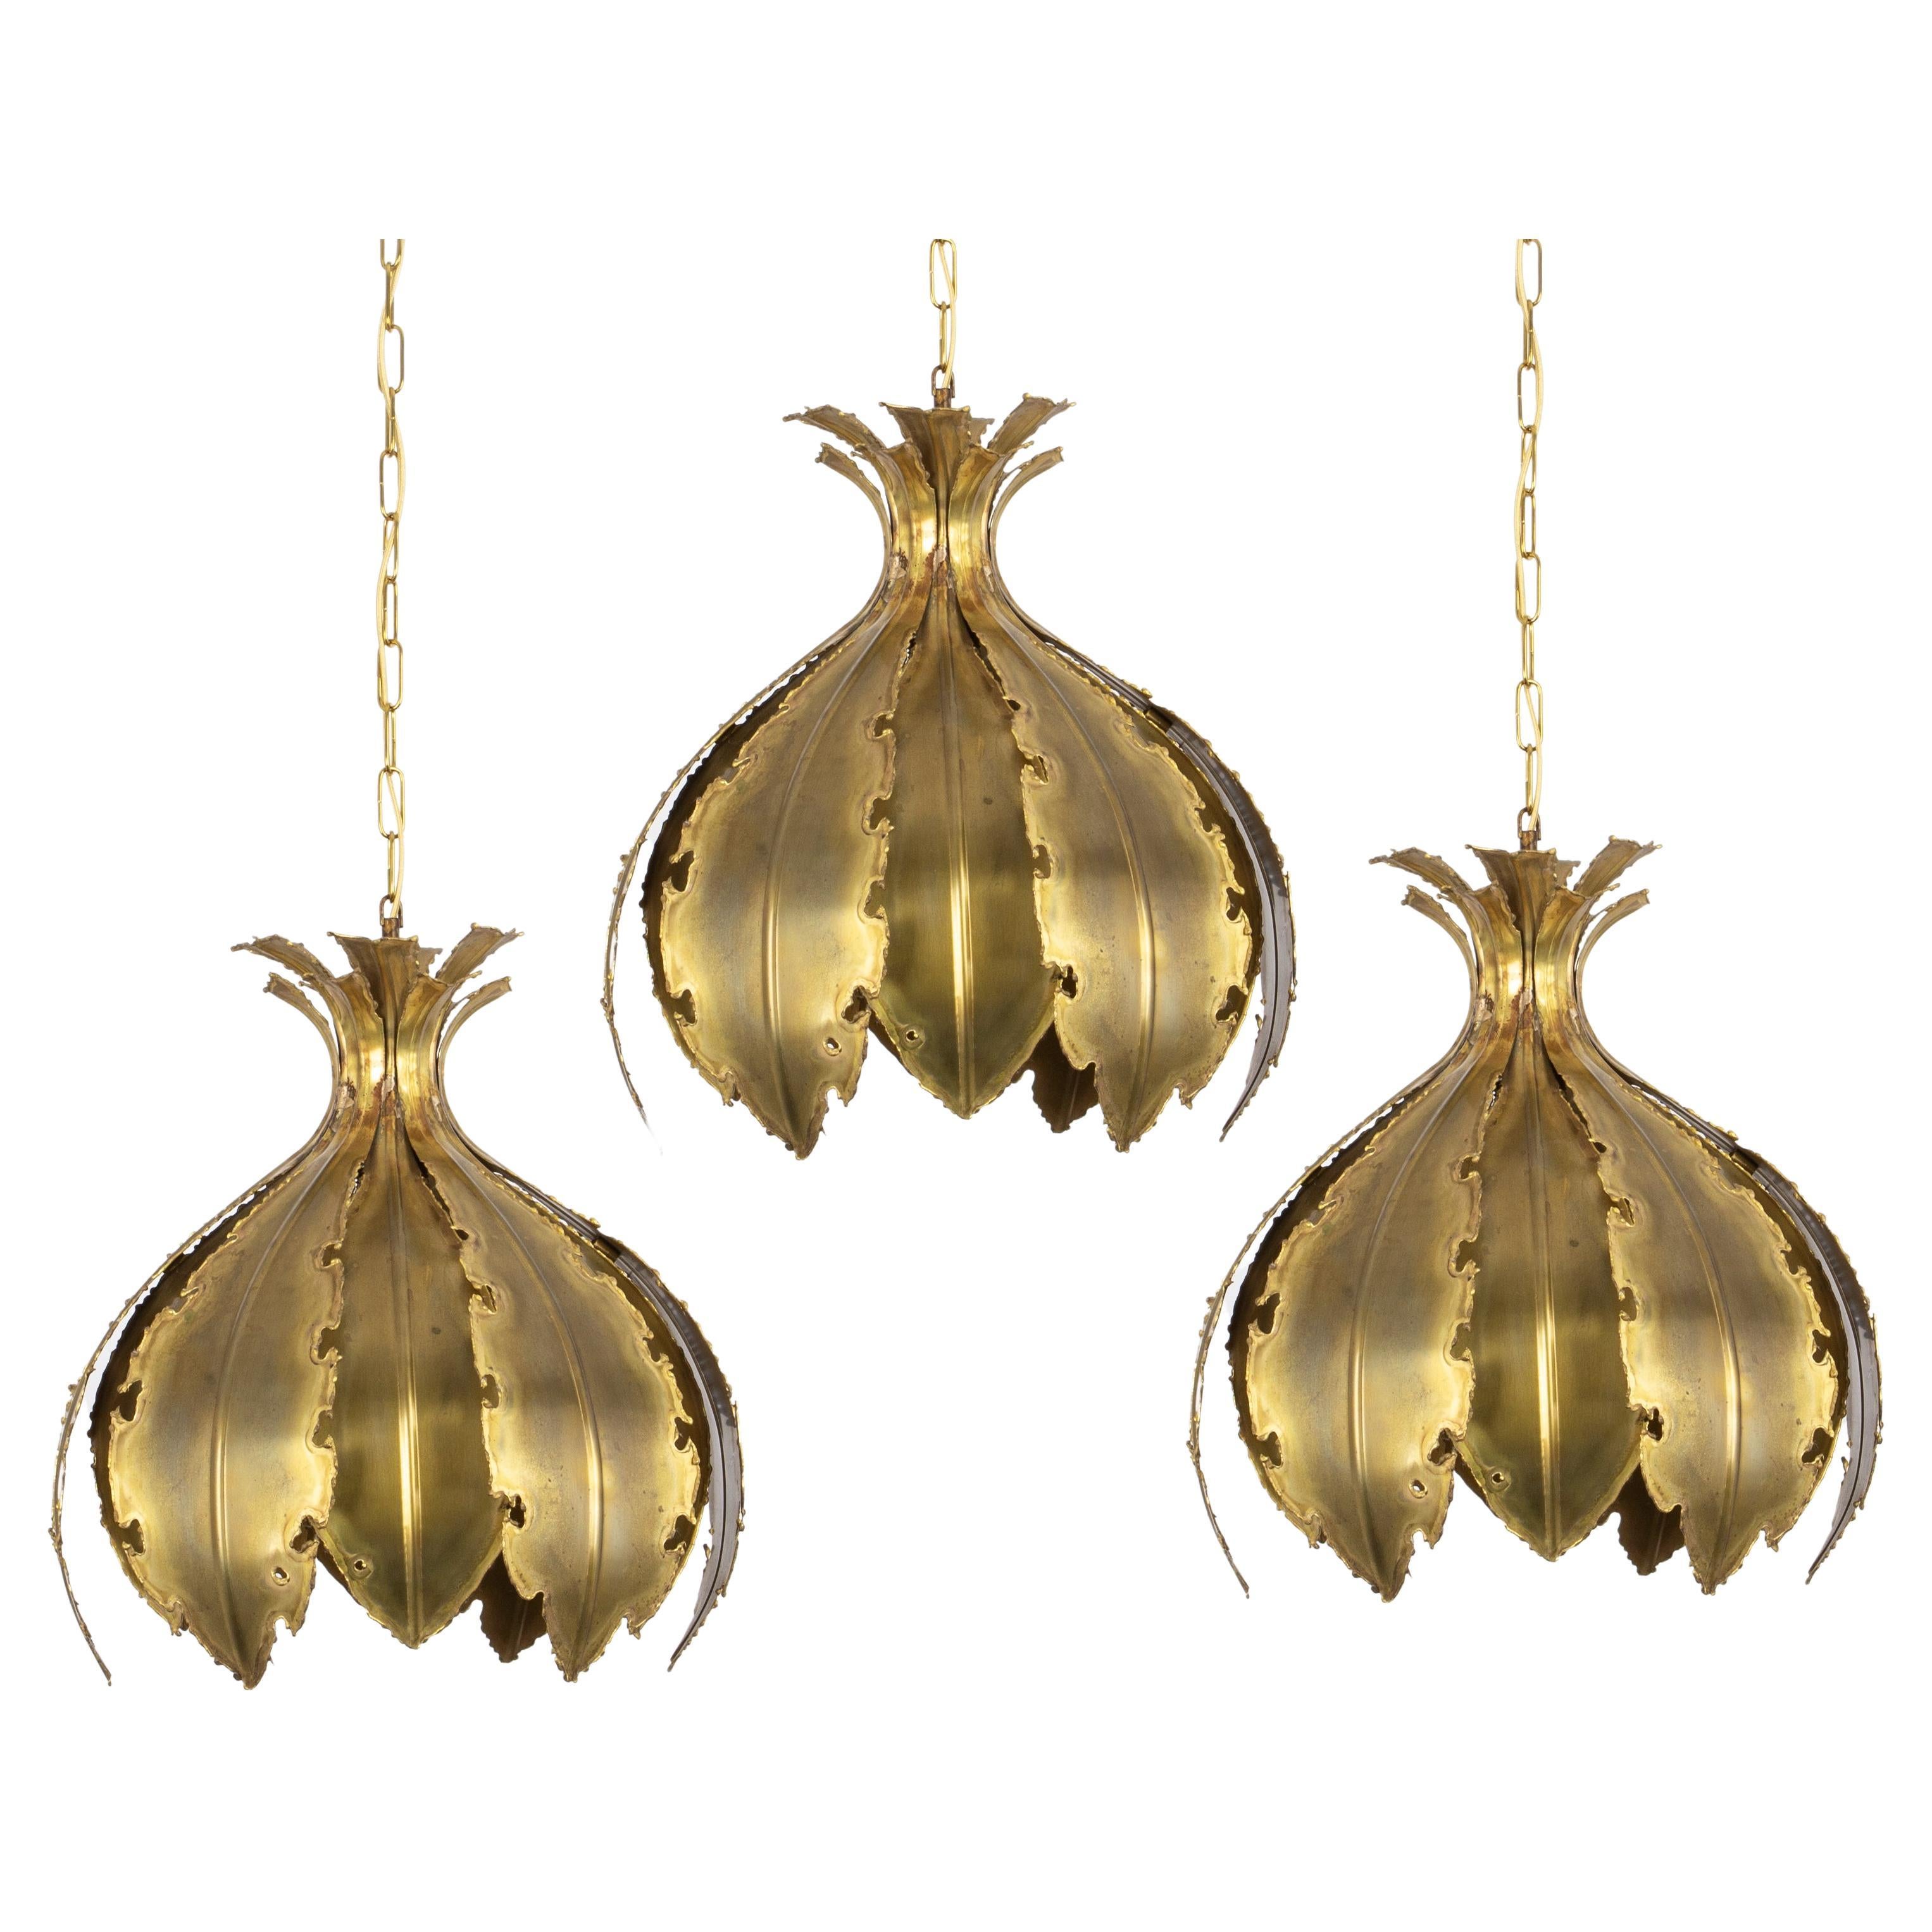 1 of 5 Stunning Brass Pendants designed svend Aage Holm Sørensen, Denmark, 1960s (pendentifs en laiton)